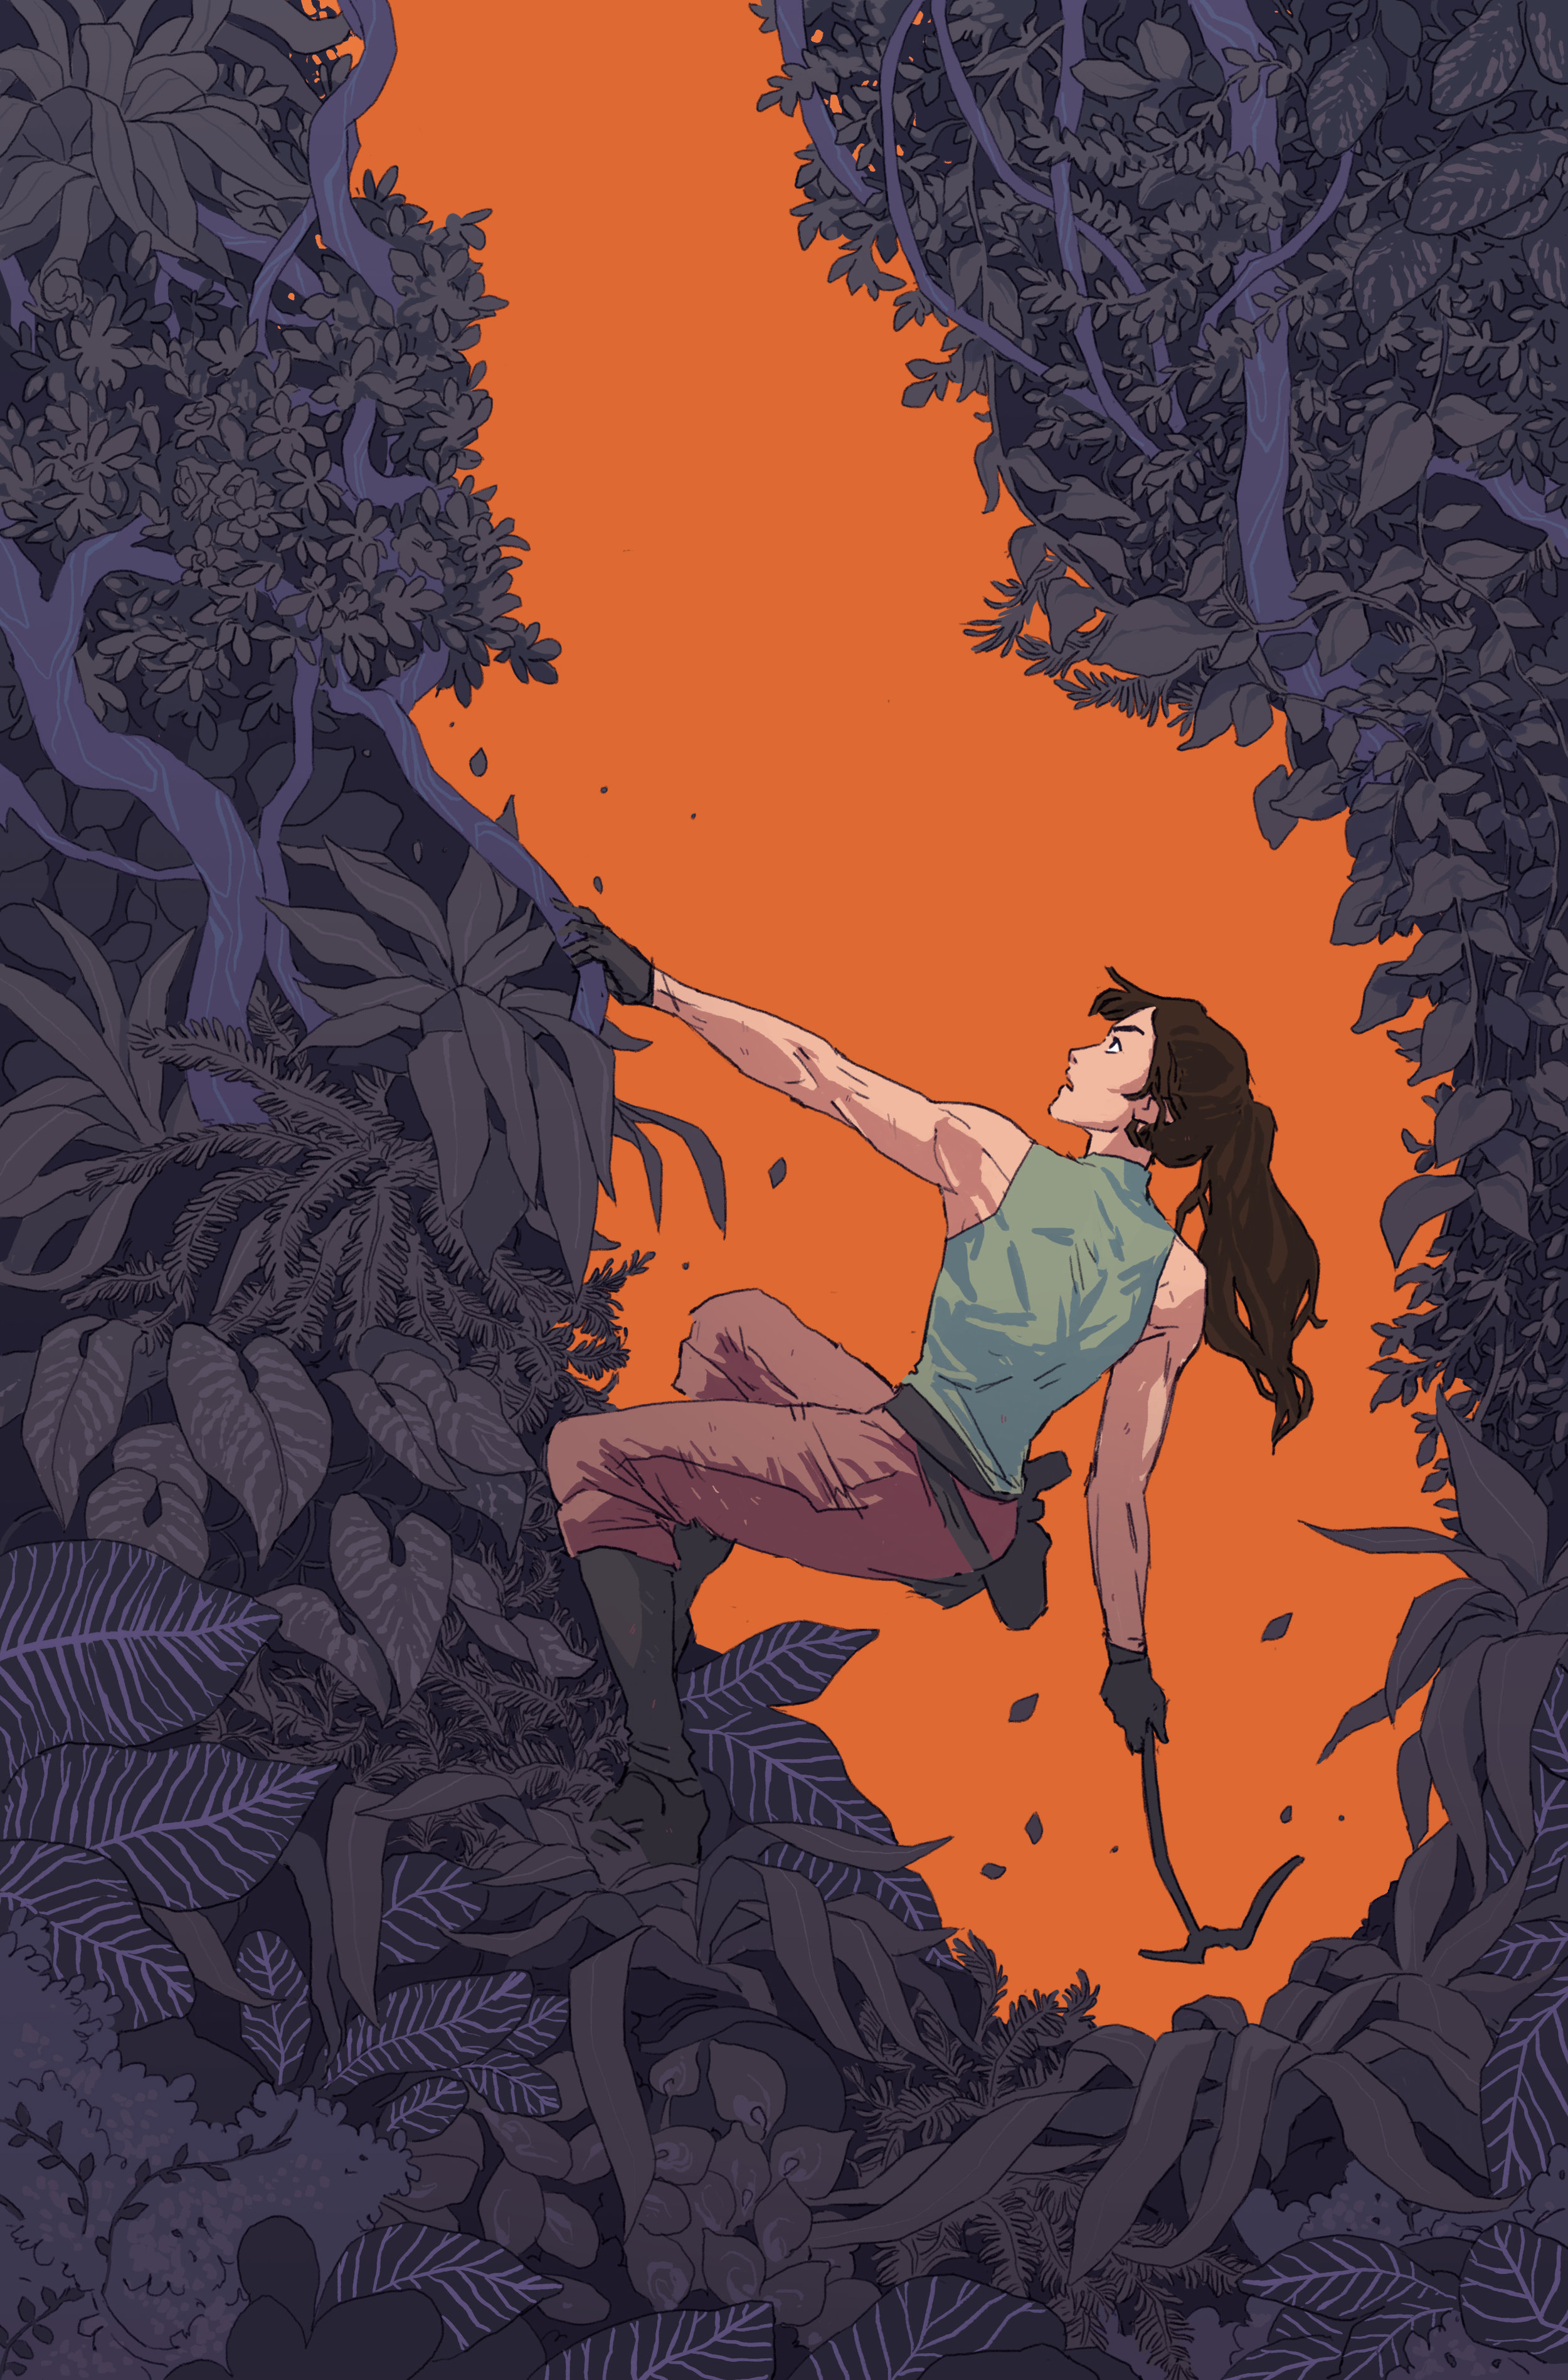  Cover  - Tomb Raider: Inferno  #2 - Dark Horse Comics 